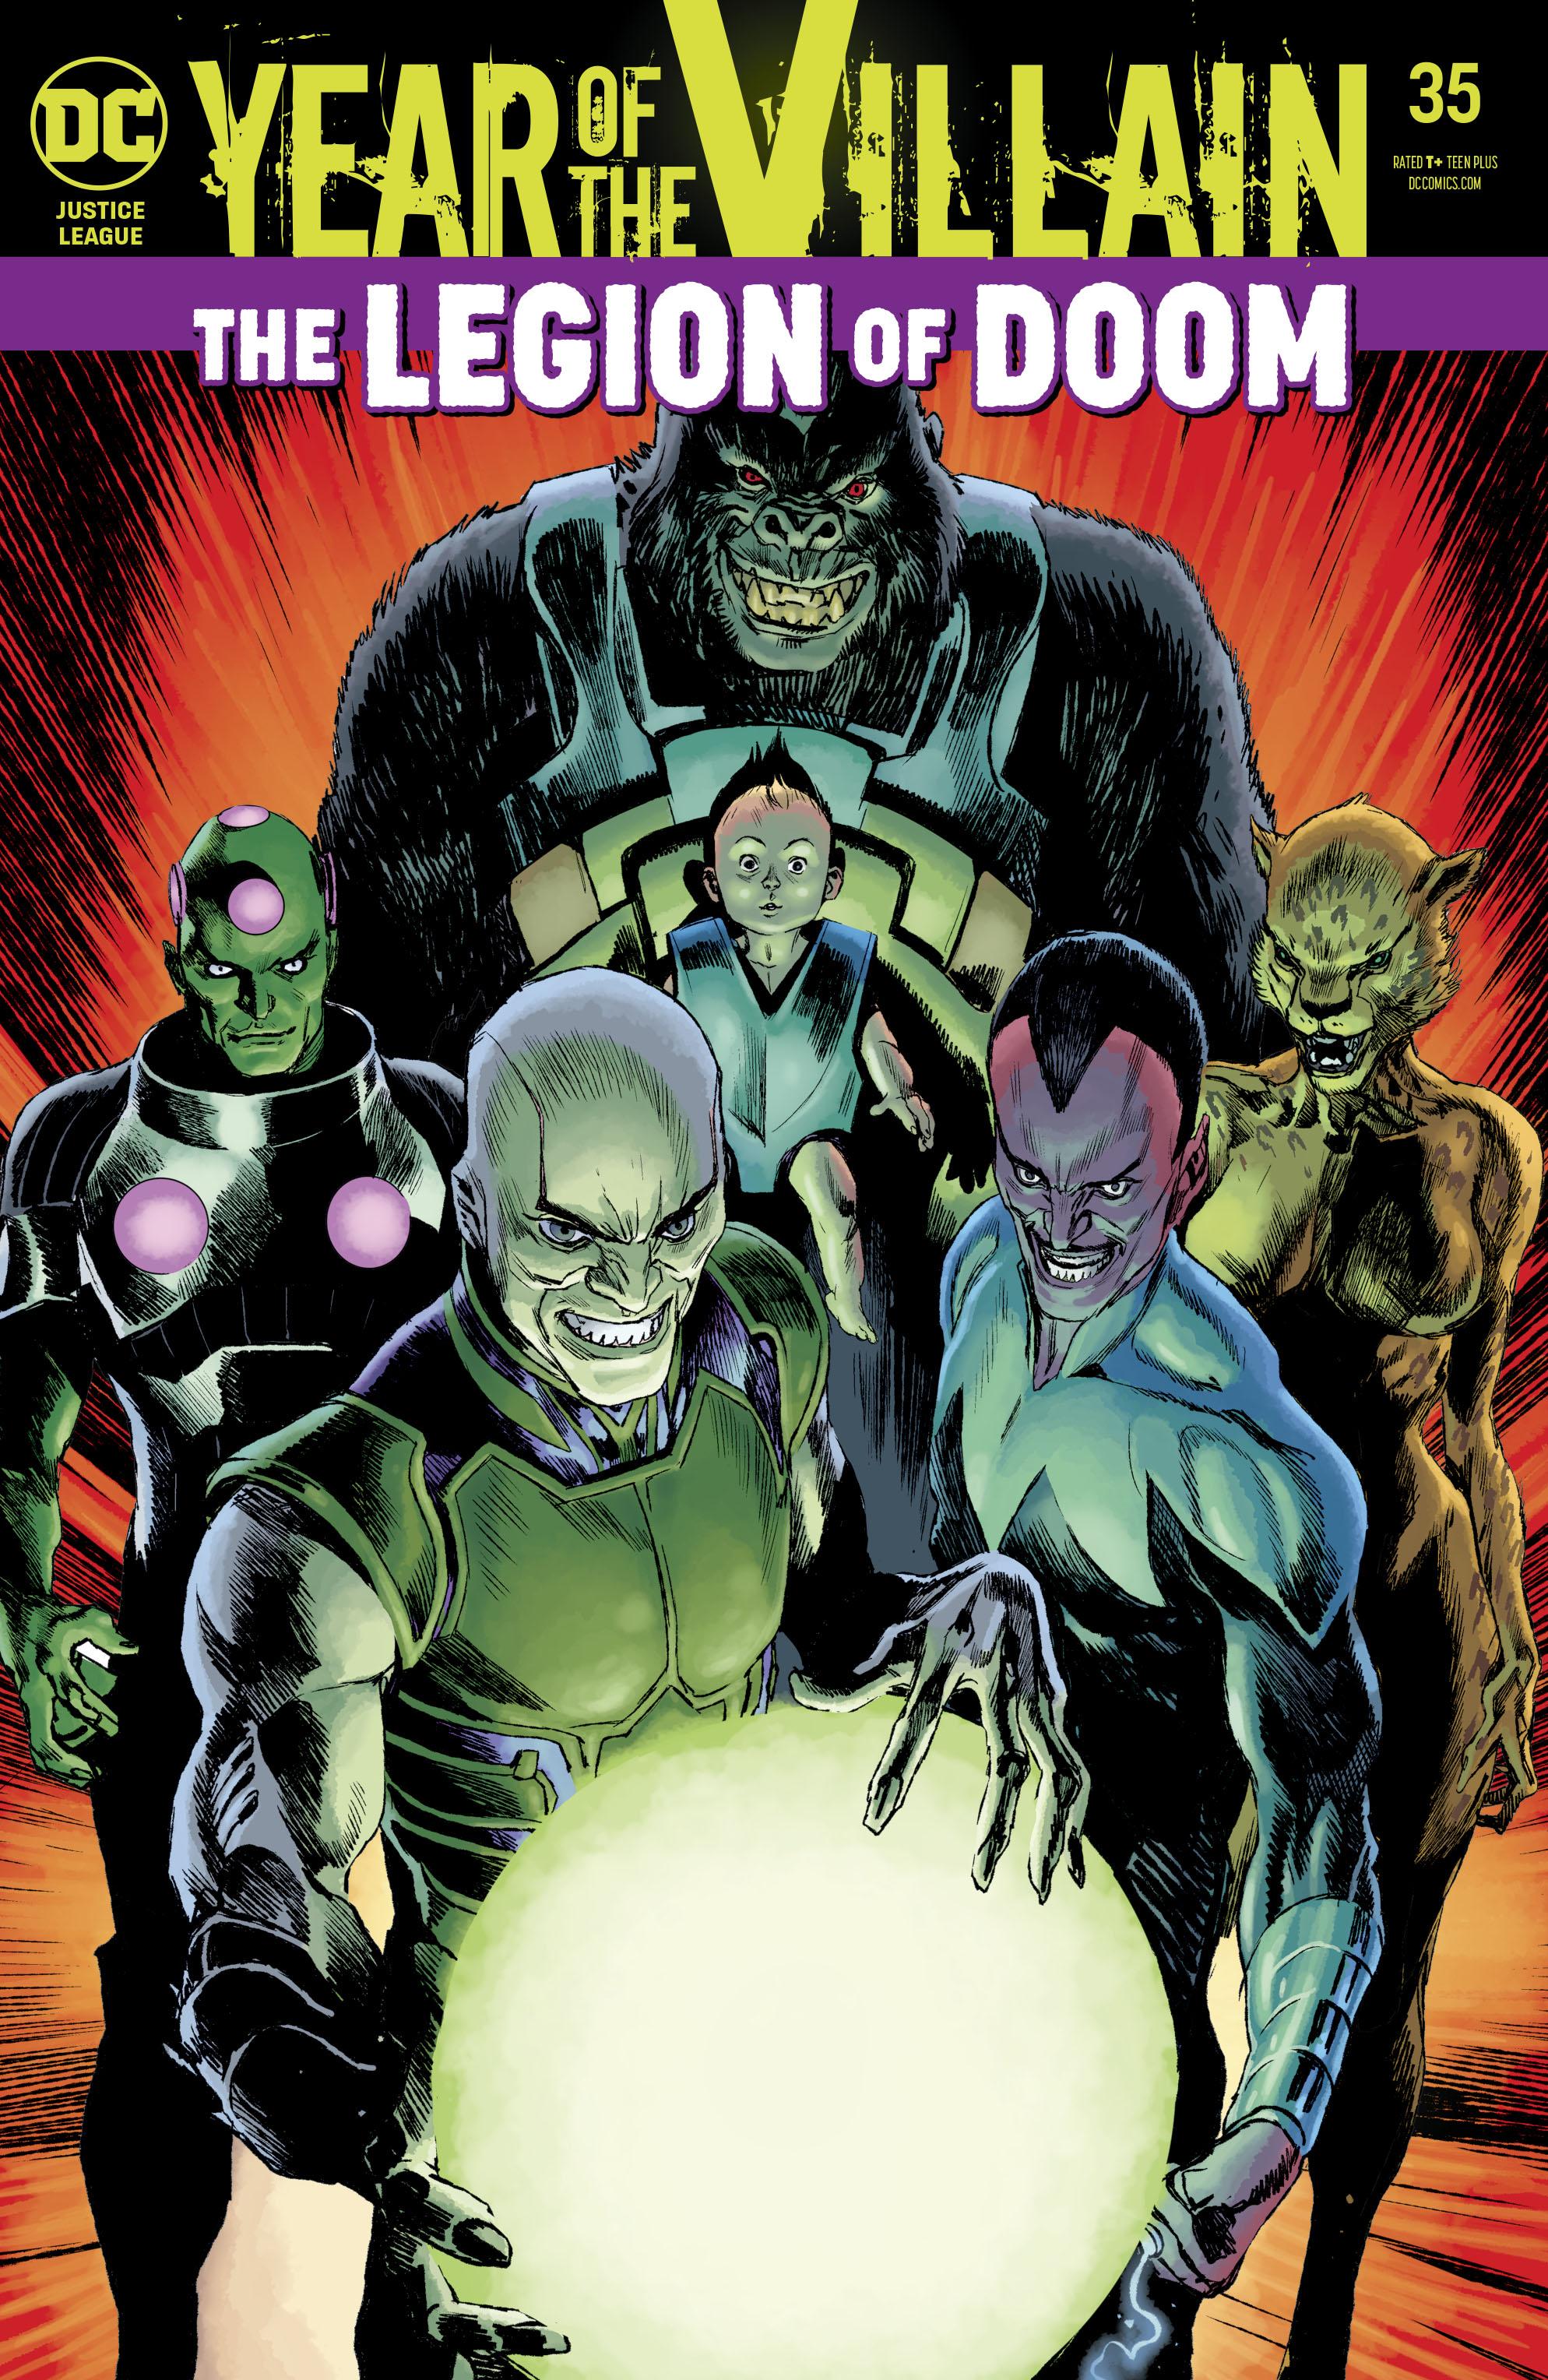 Justice League Vol. 4 #35